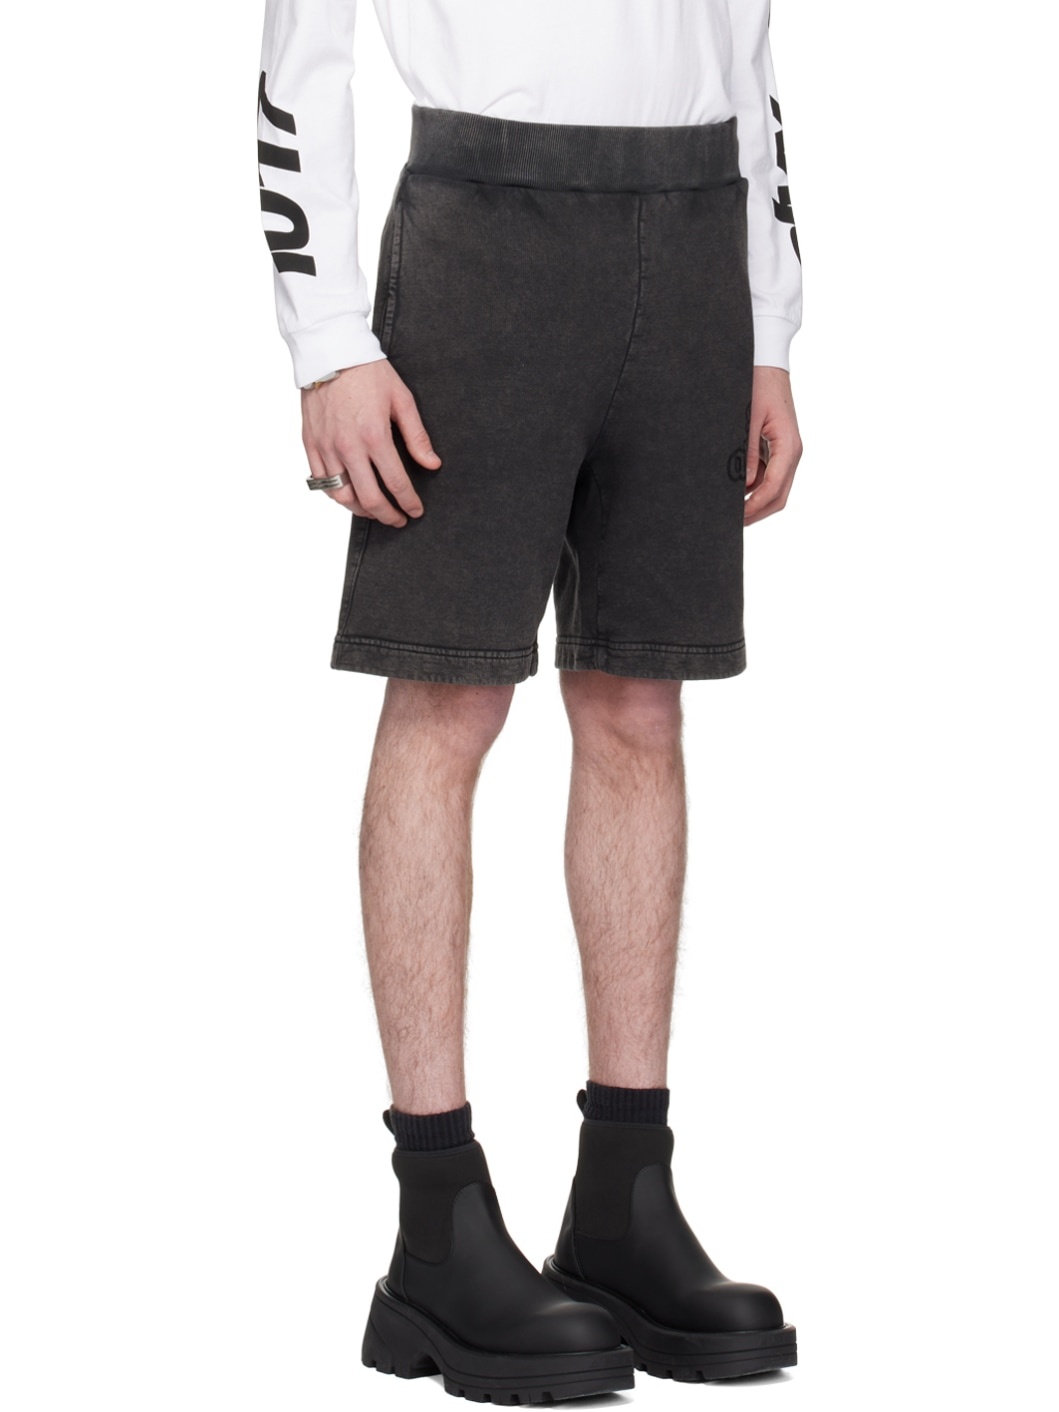 Black Cross Shorts - 2